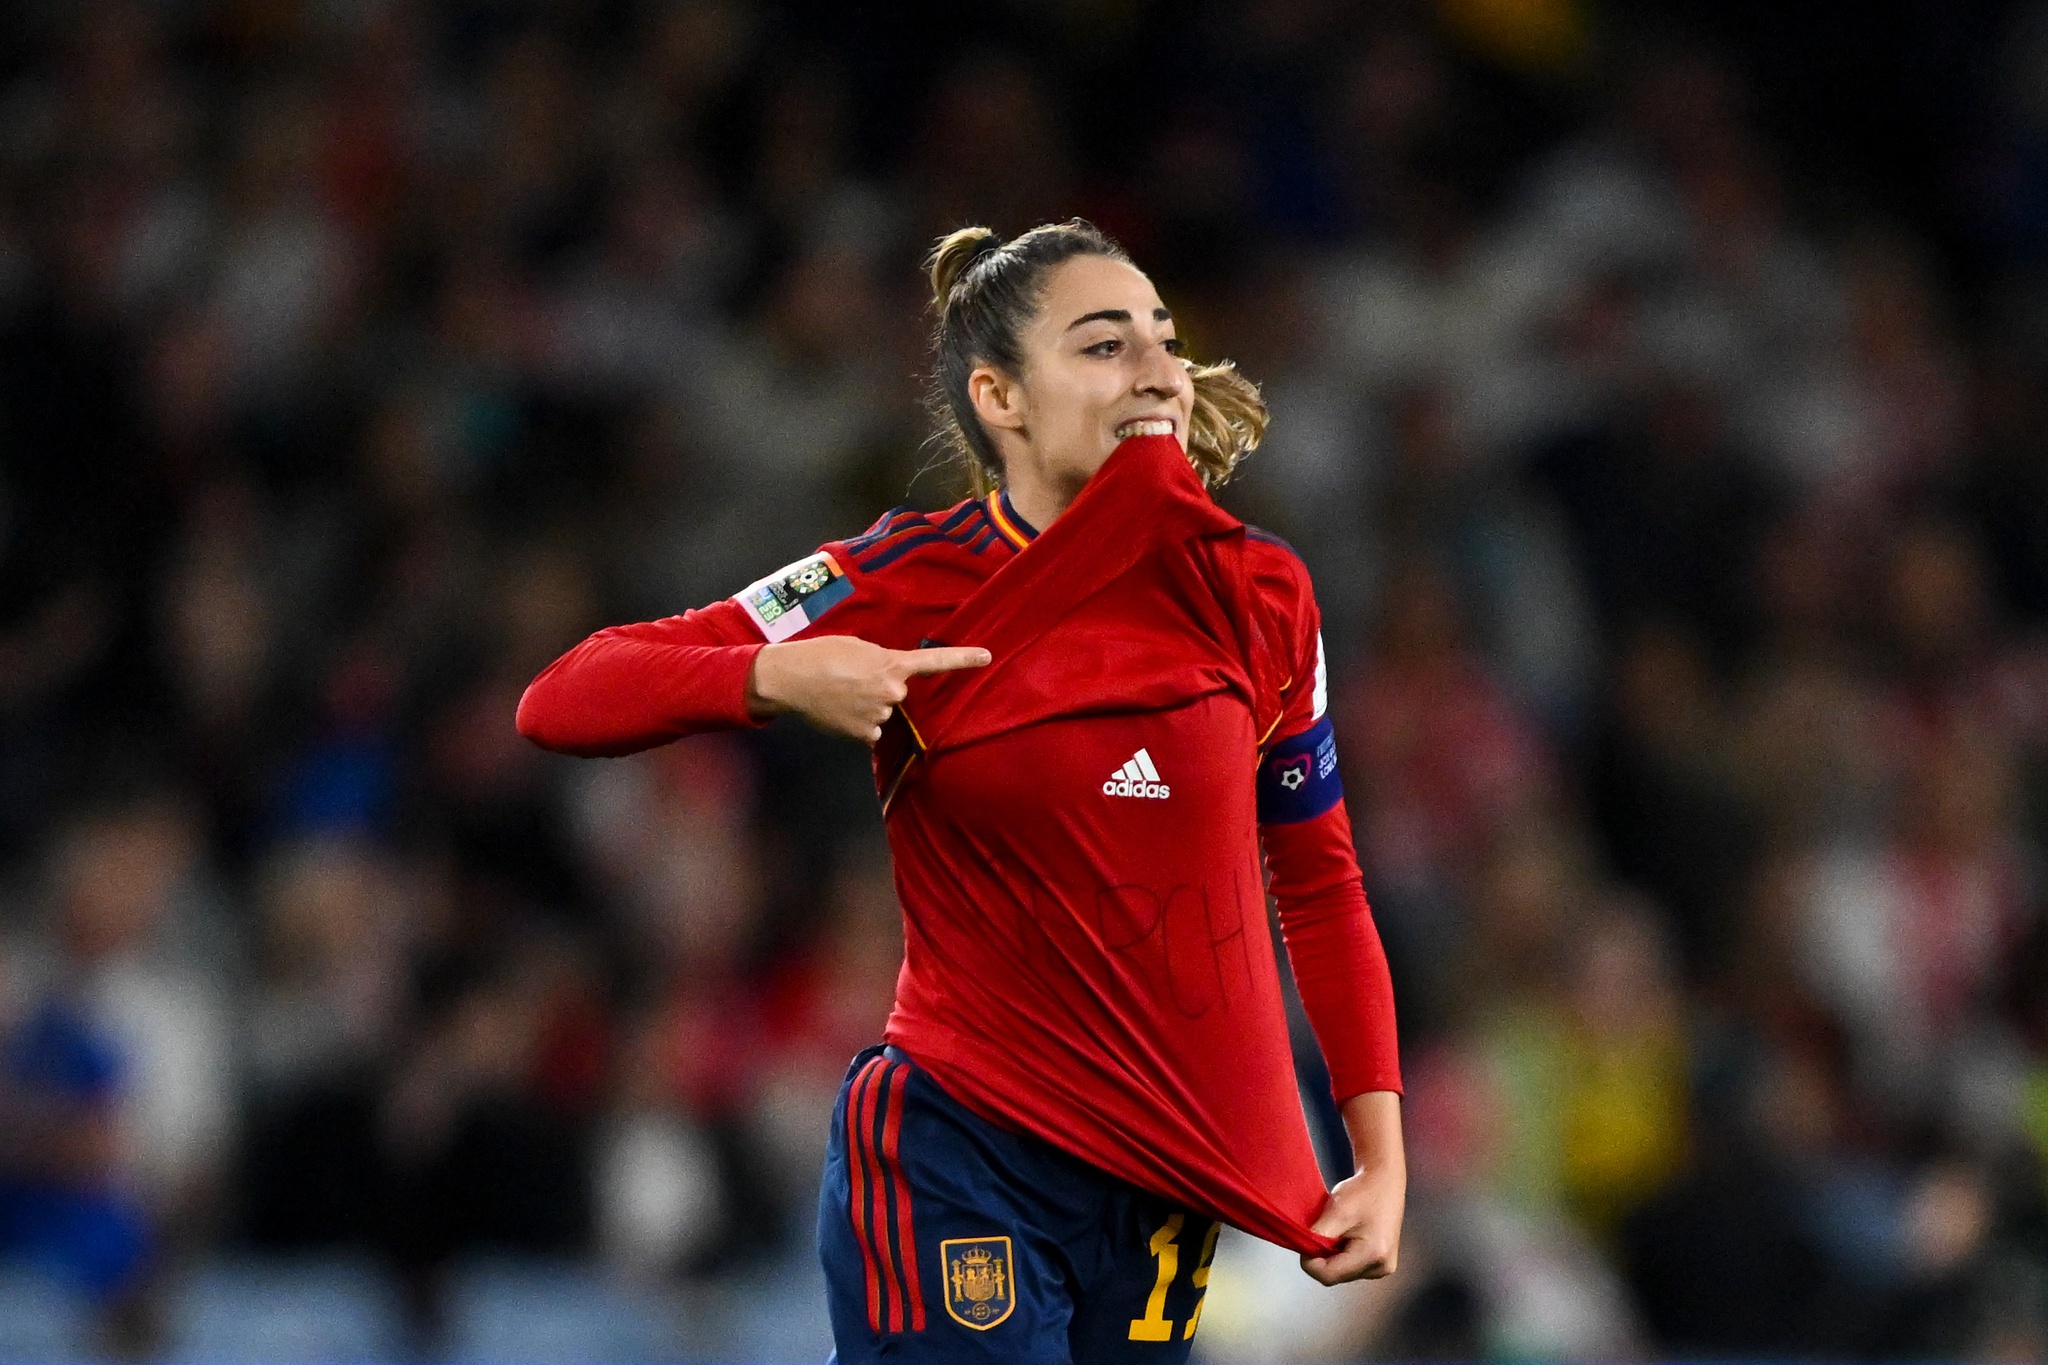 Spanish Women’s World Cup Player Scores Winning Goal Despite Tragic Loss of Father